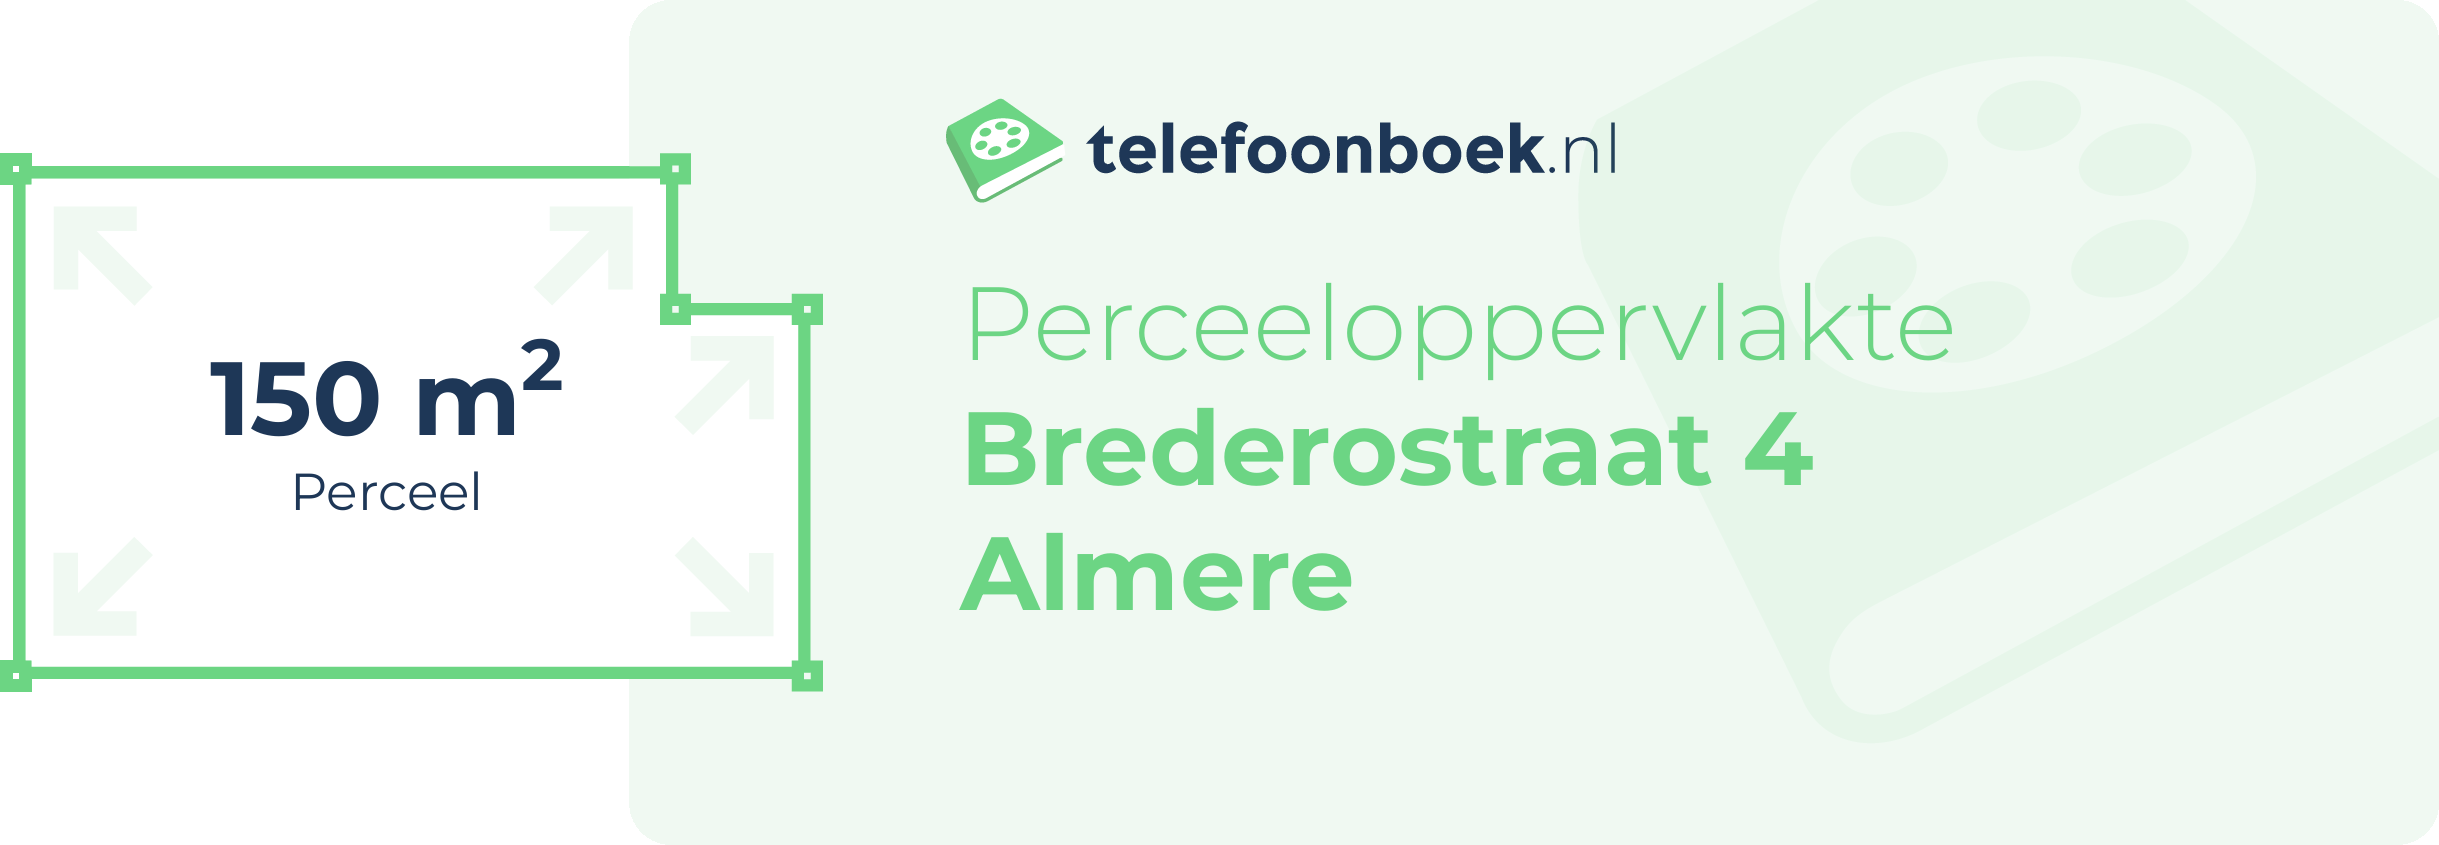 Perceeloppervlakte Brederostraat 4 Almere